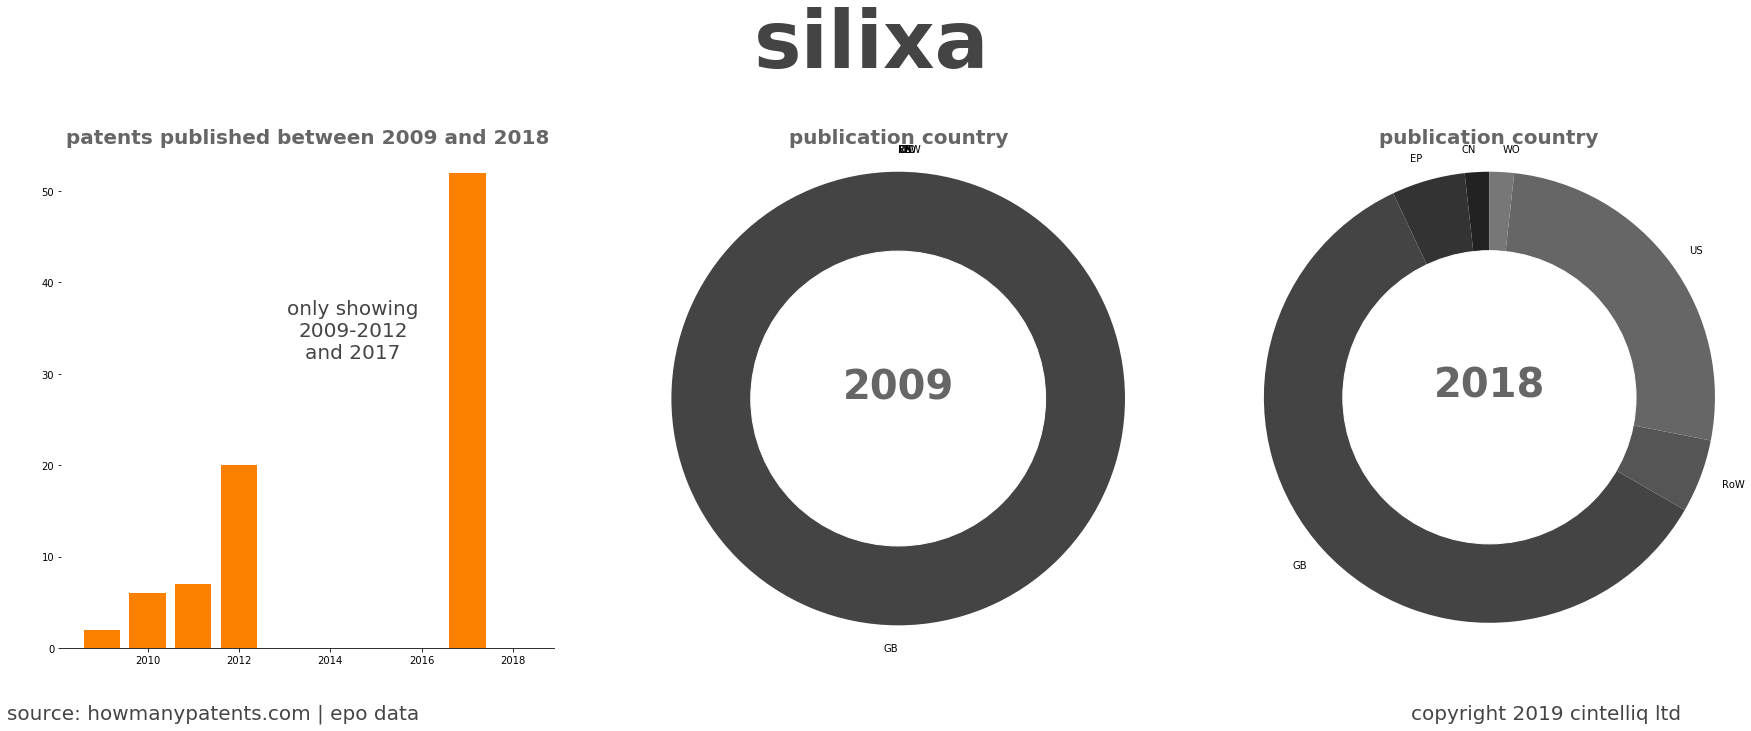 summary of patents for Silixa